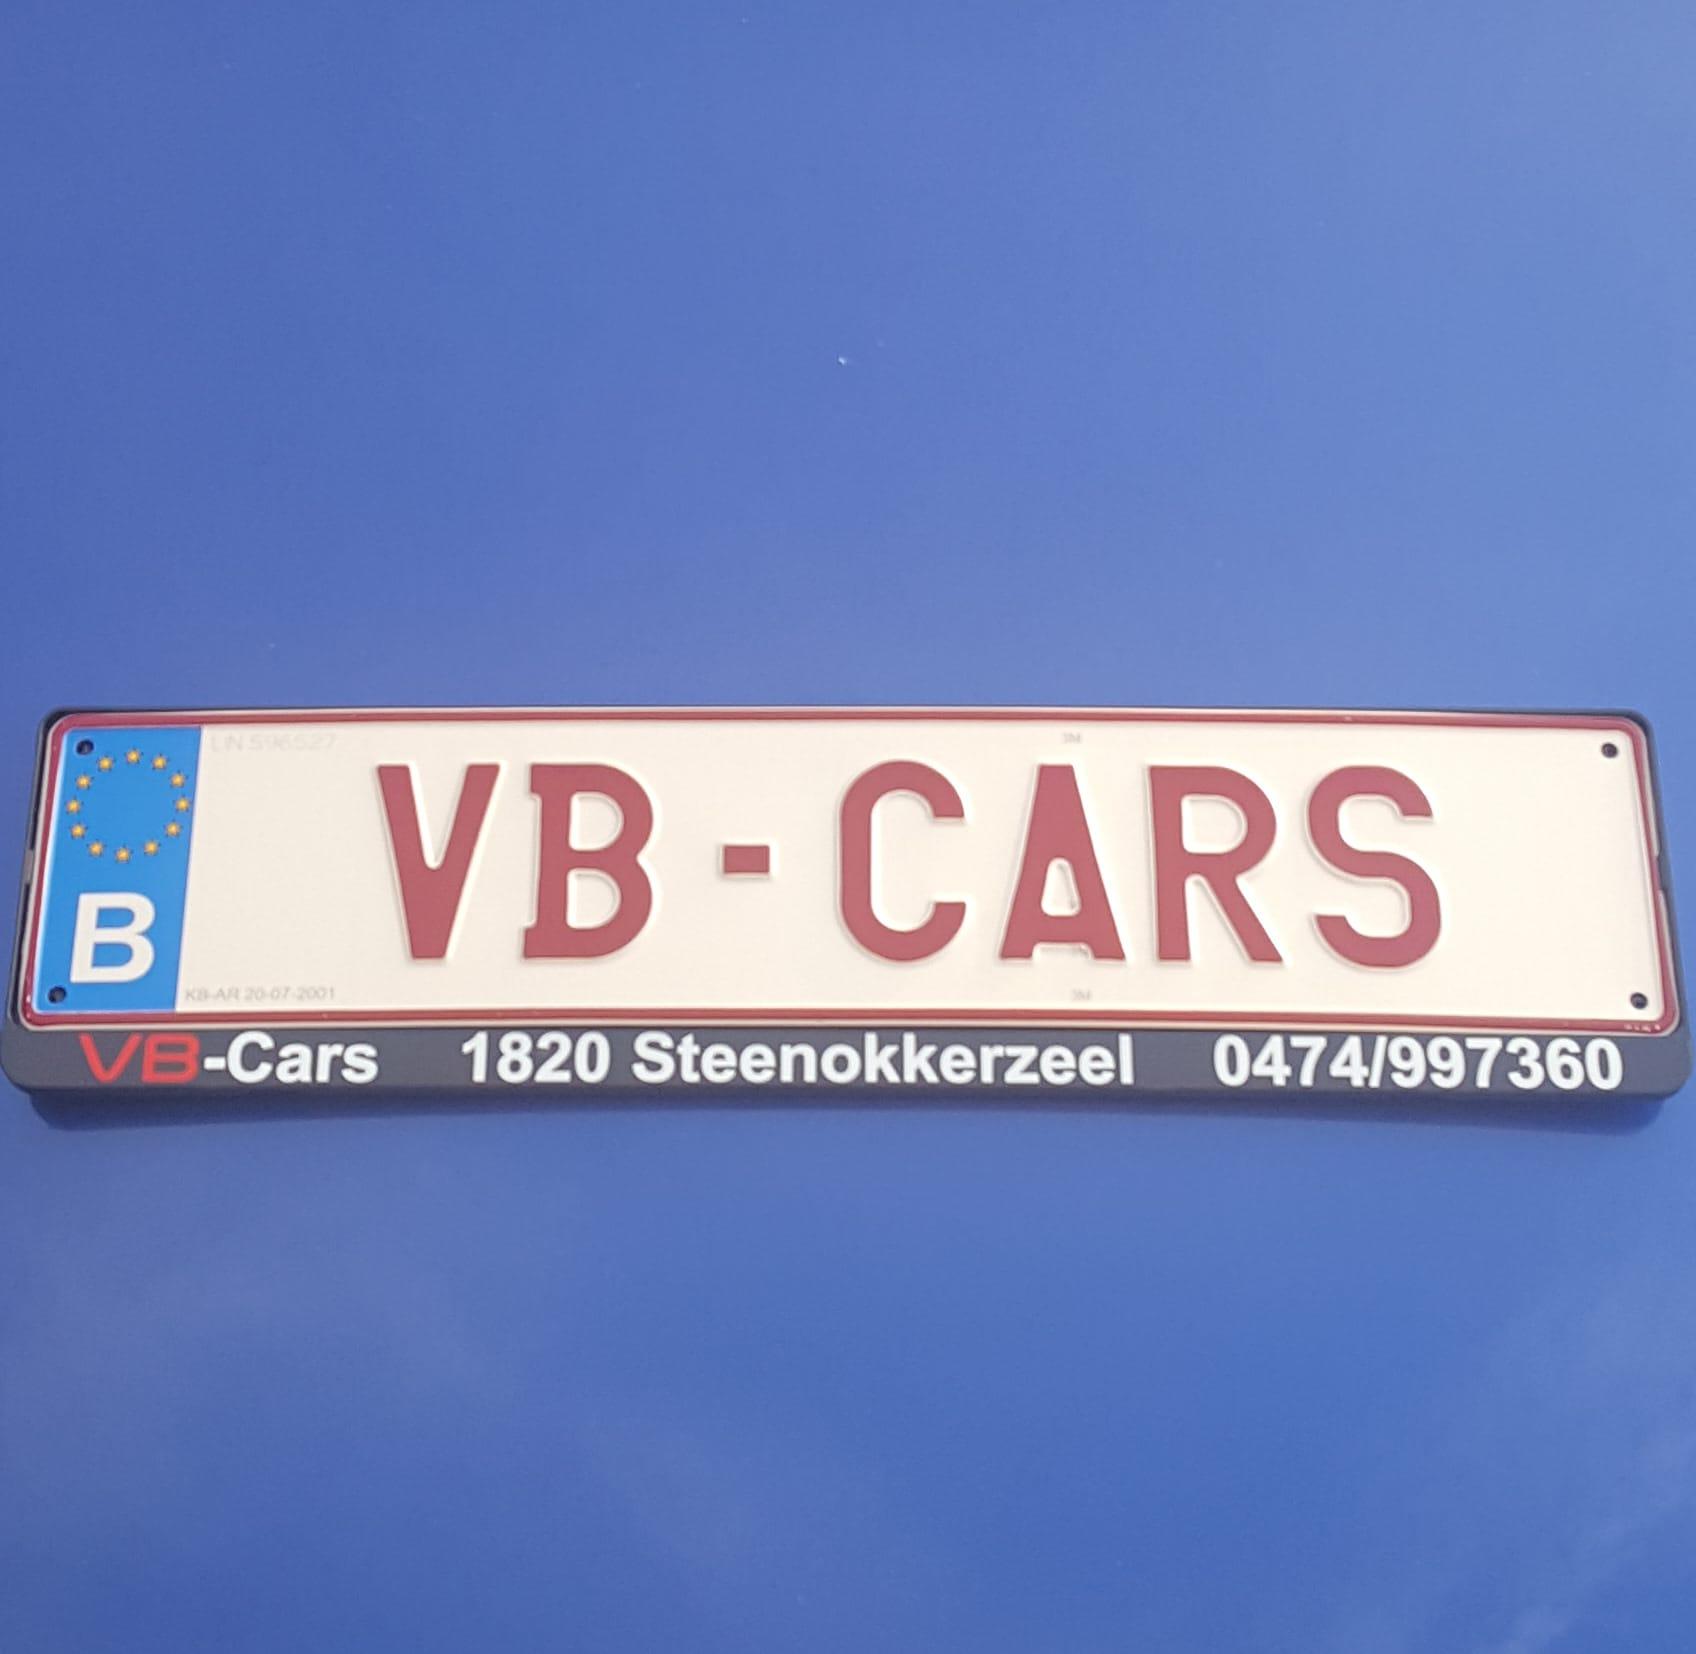 Images VB-Cars